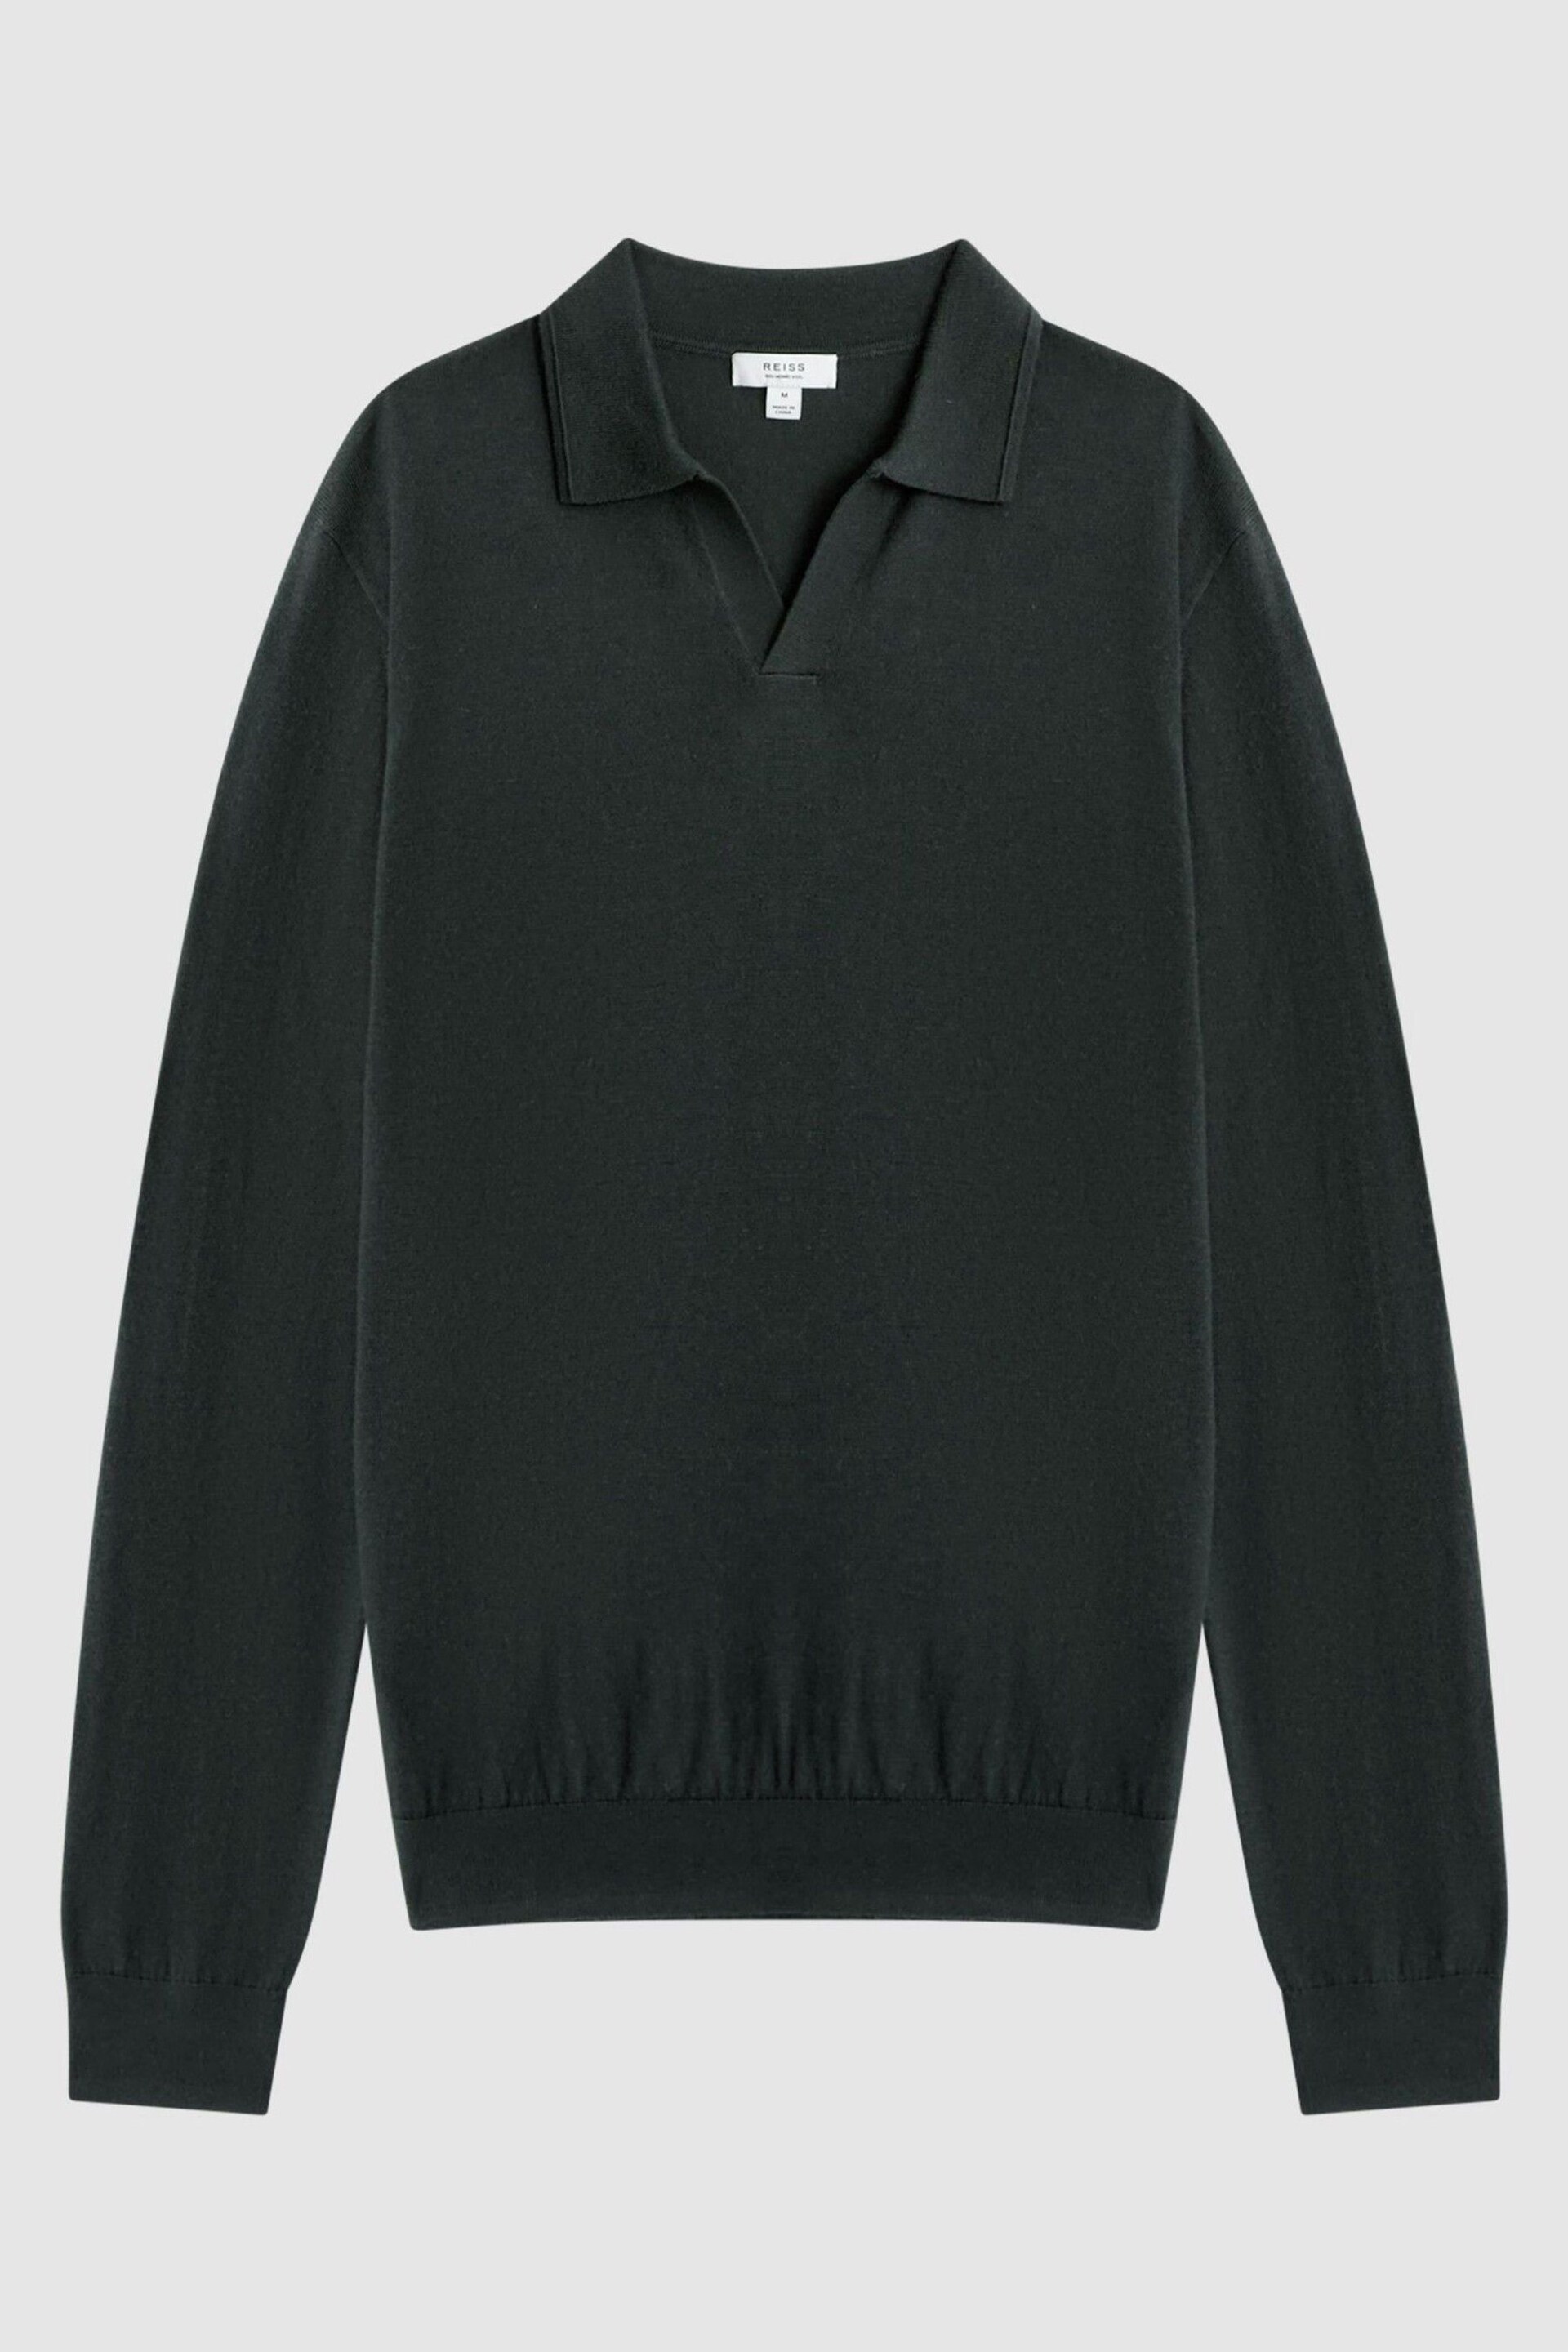 Reiss Forest Milburn Merino Wool Open Collar Polo Shirt - Image 2 of 5